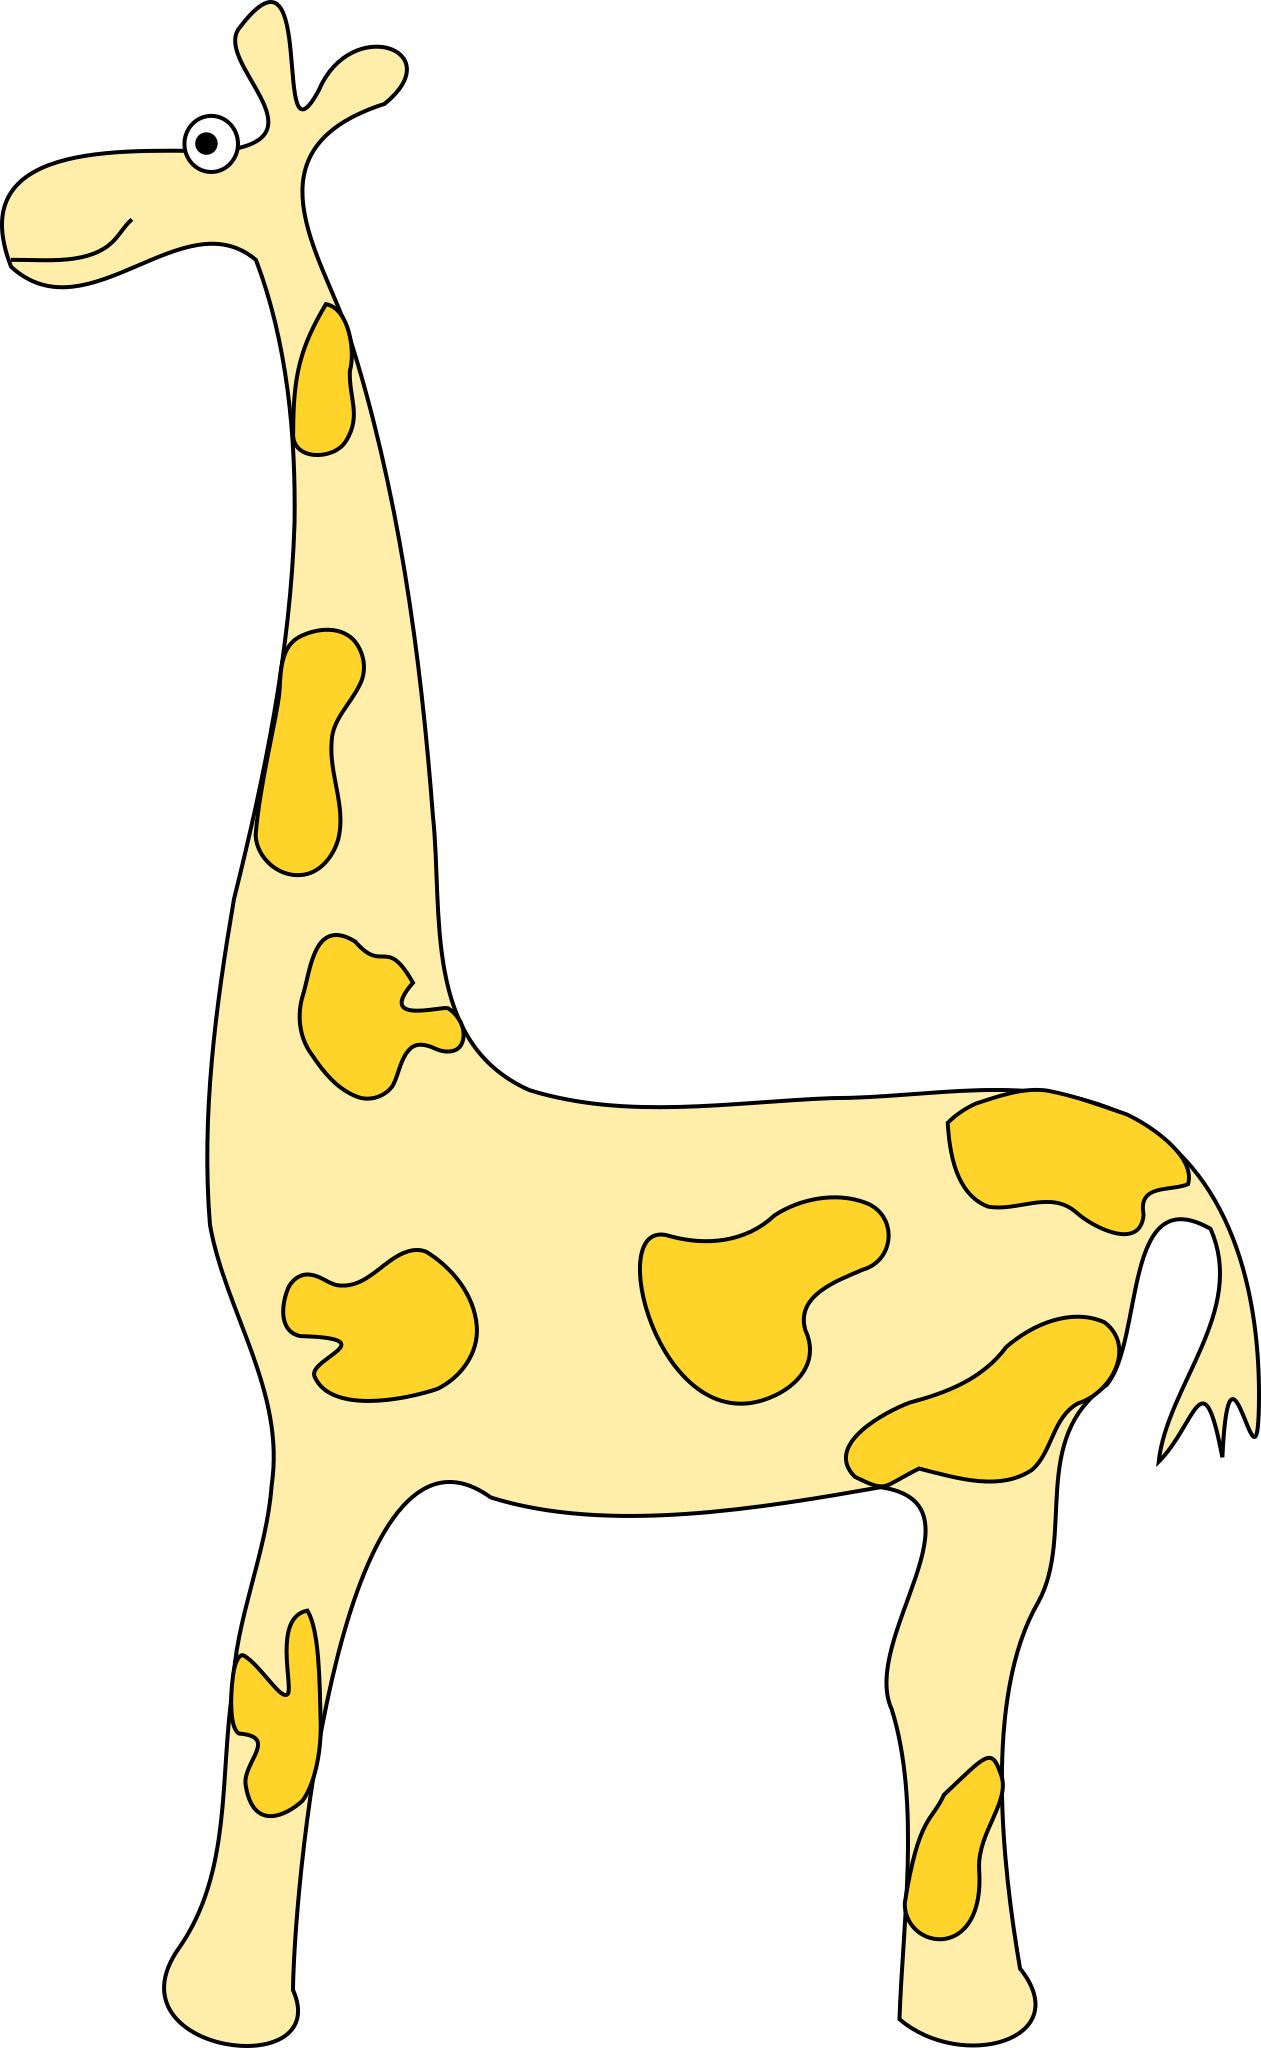 Жираф схематично